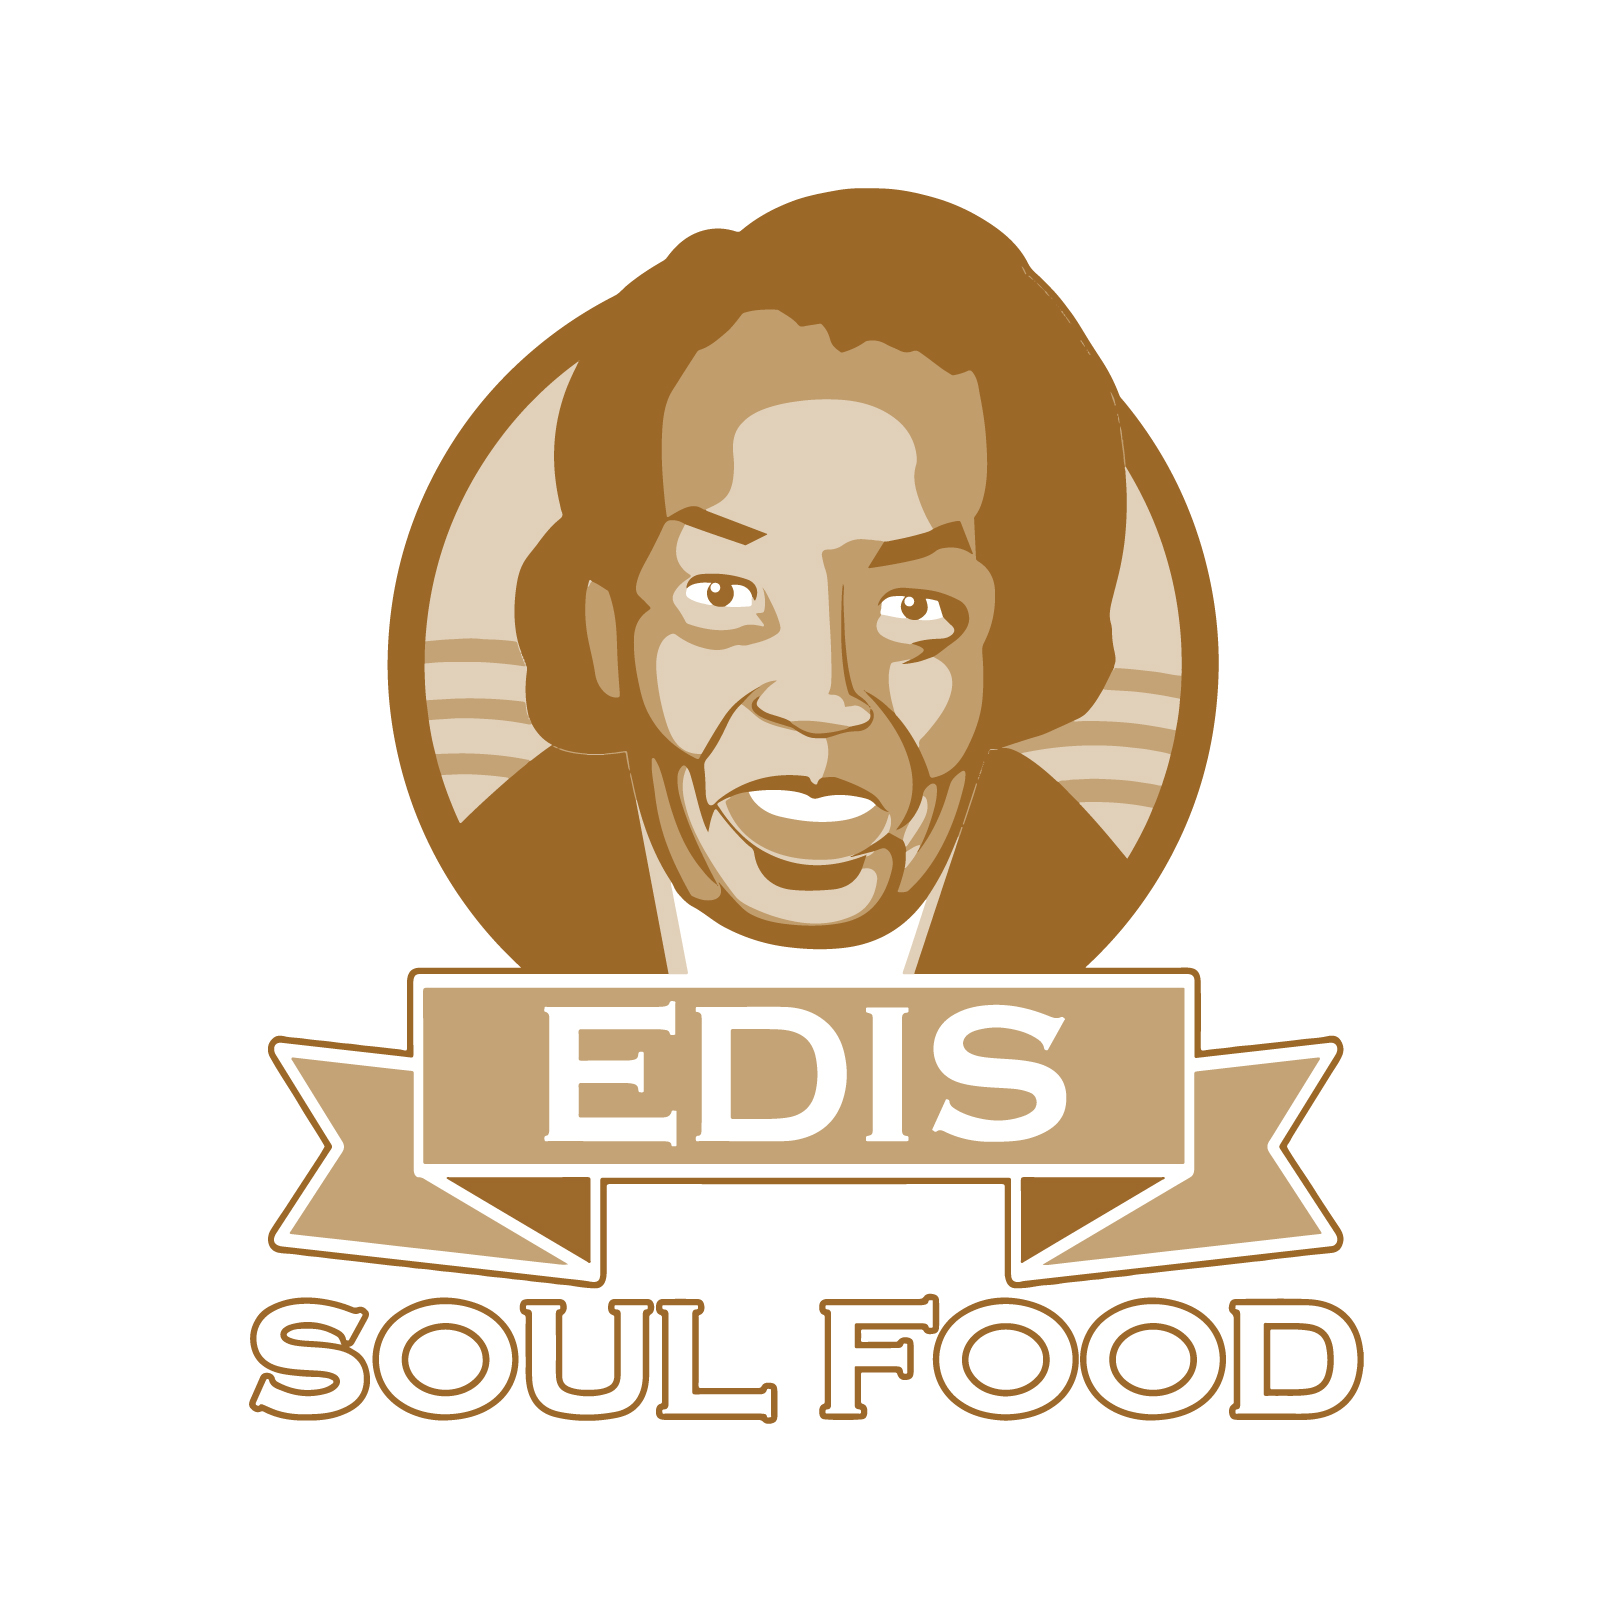 soul food restaurant logos